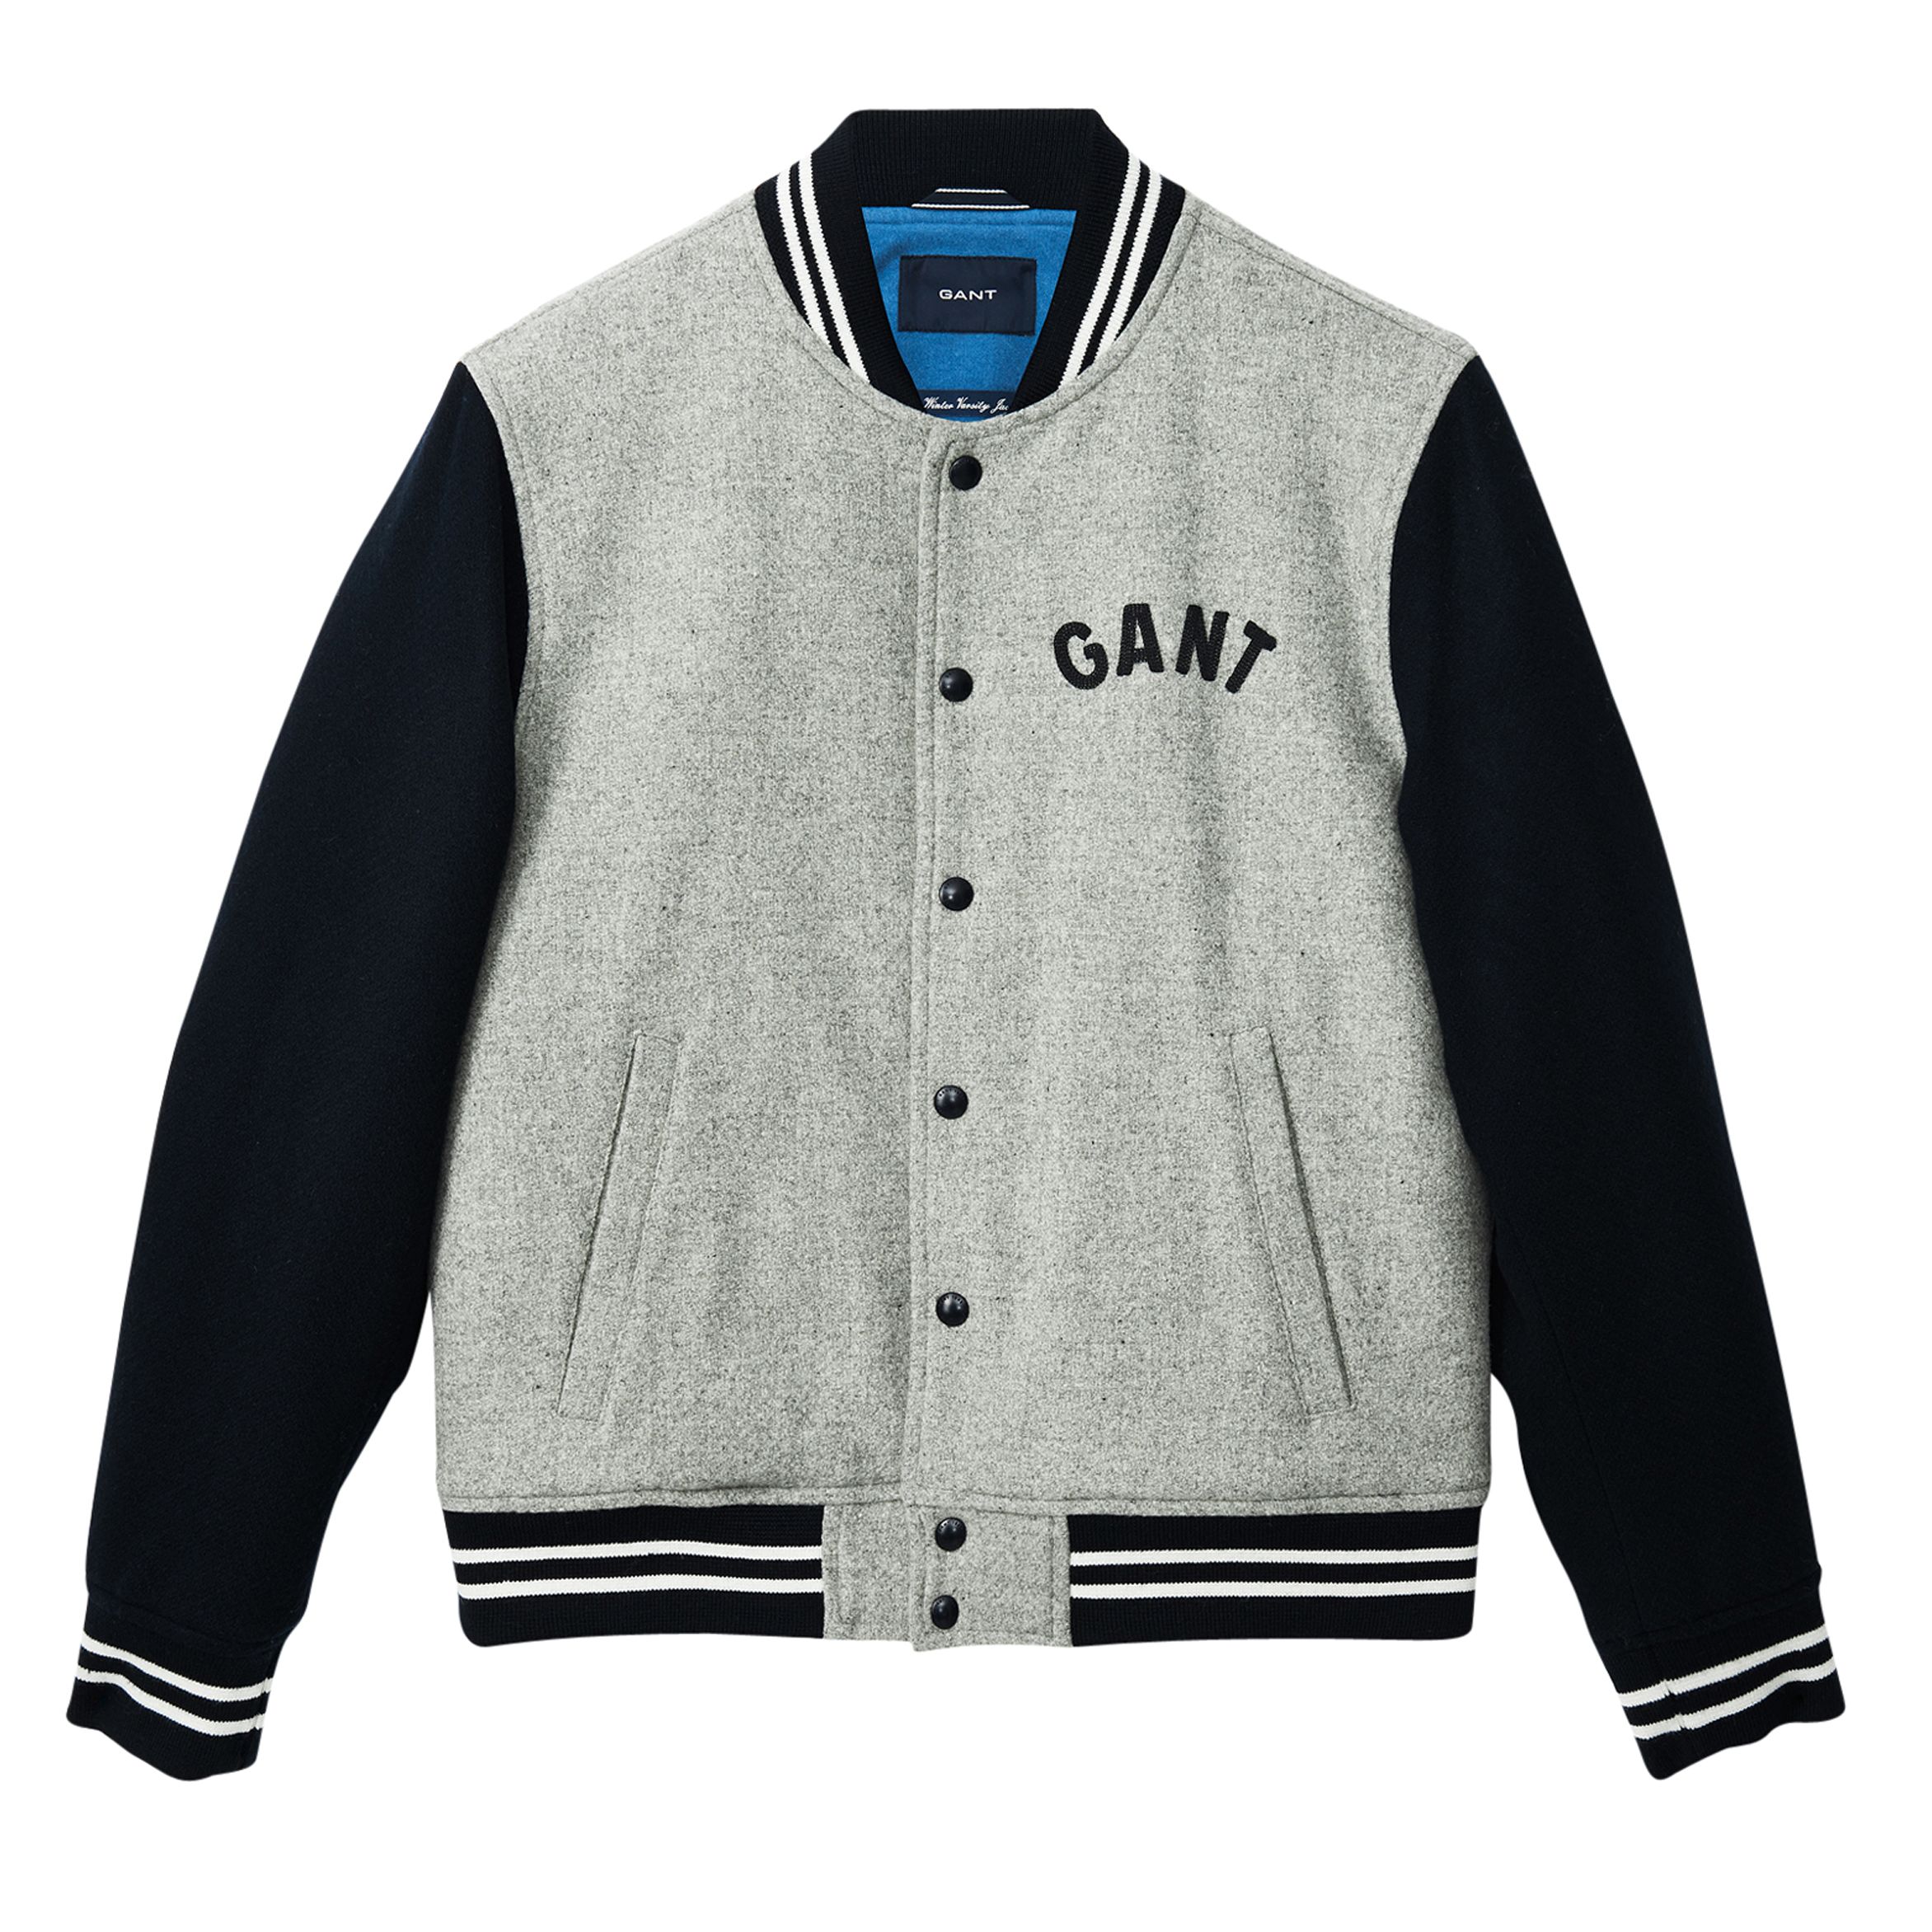 Gant Varsity Bomber Jacket, Grey at John Lewis & Partners